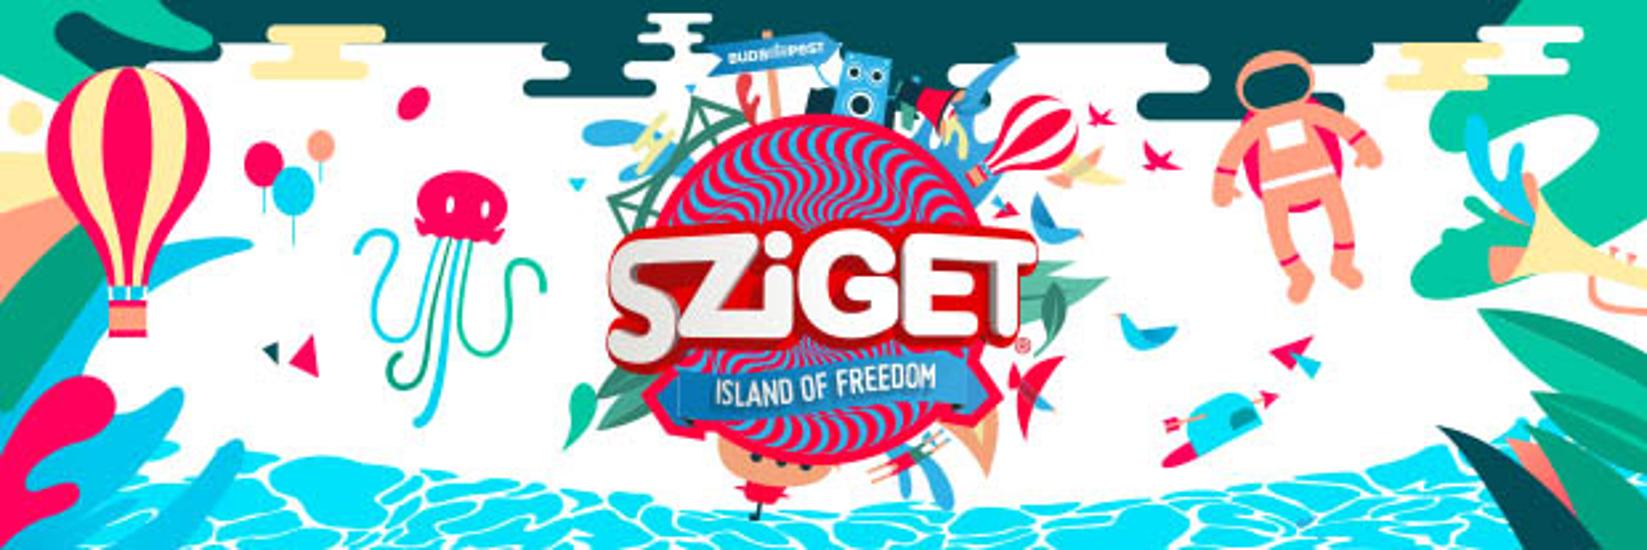 Sziget Festival Program Is Now Complete